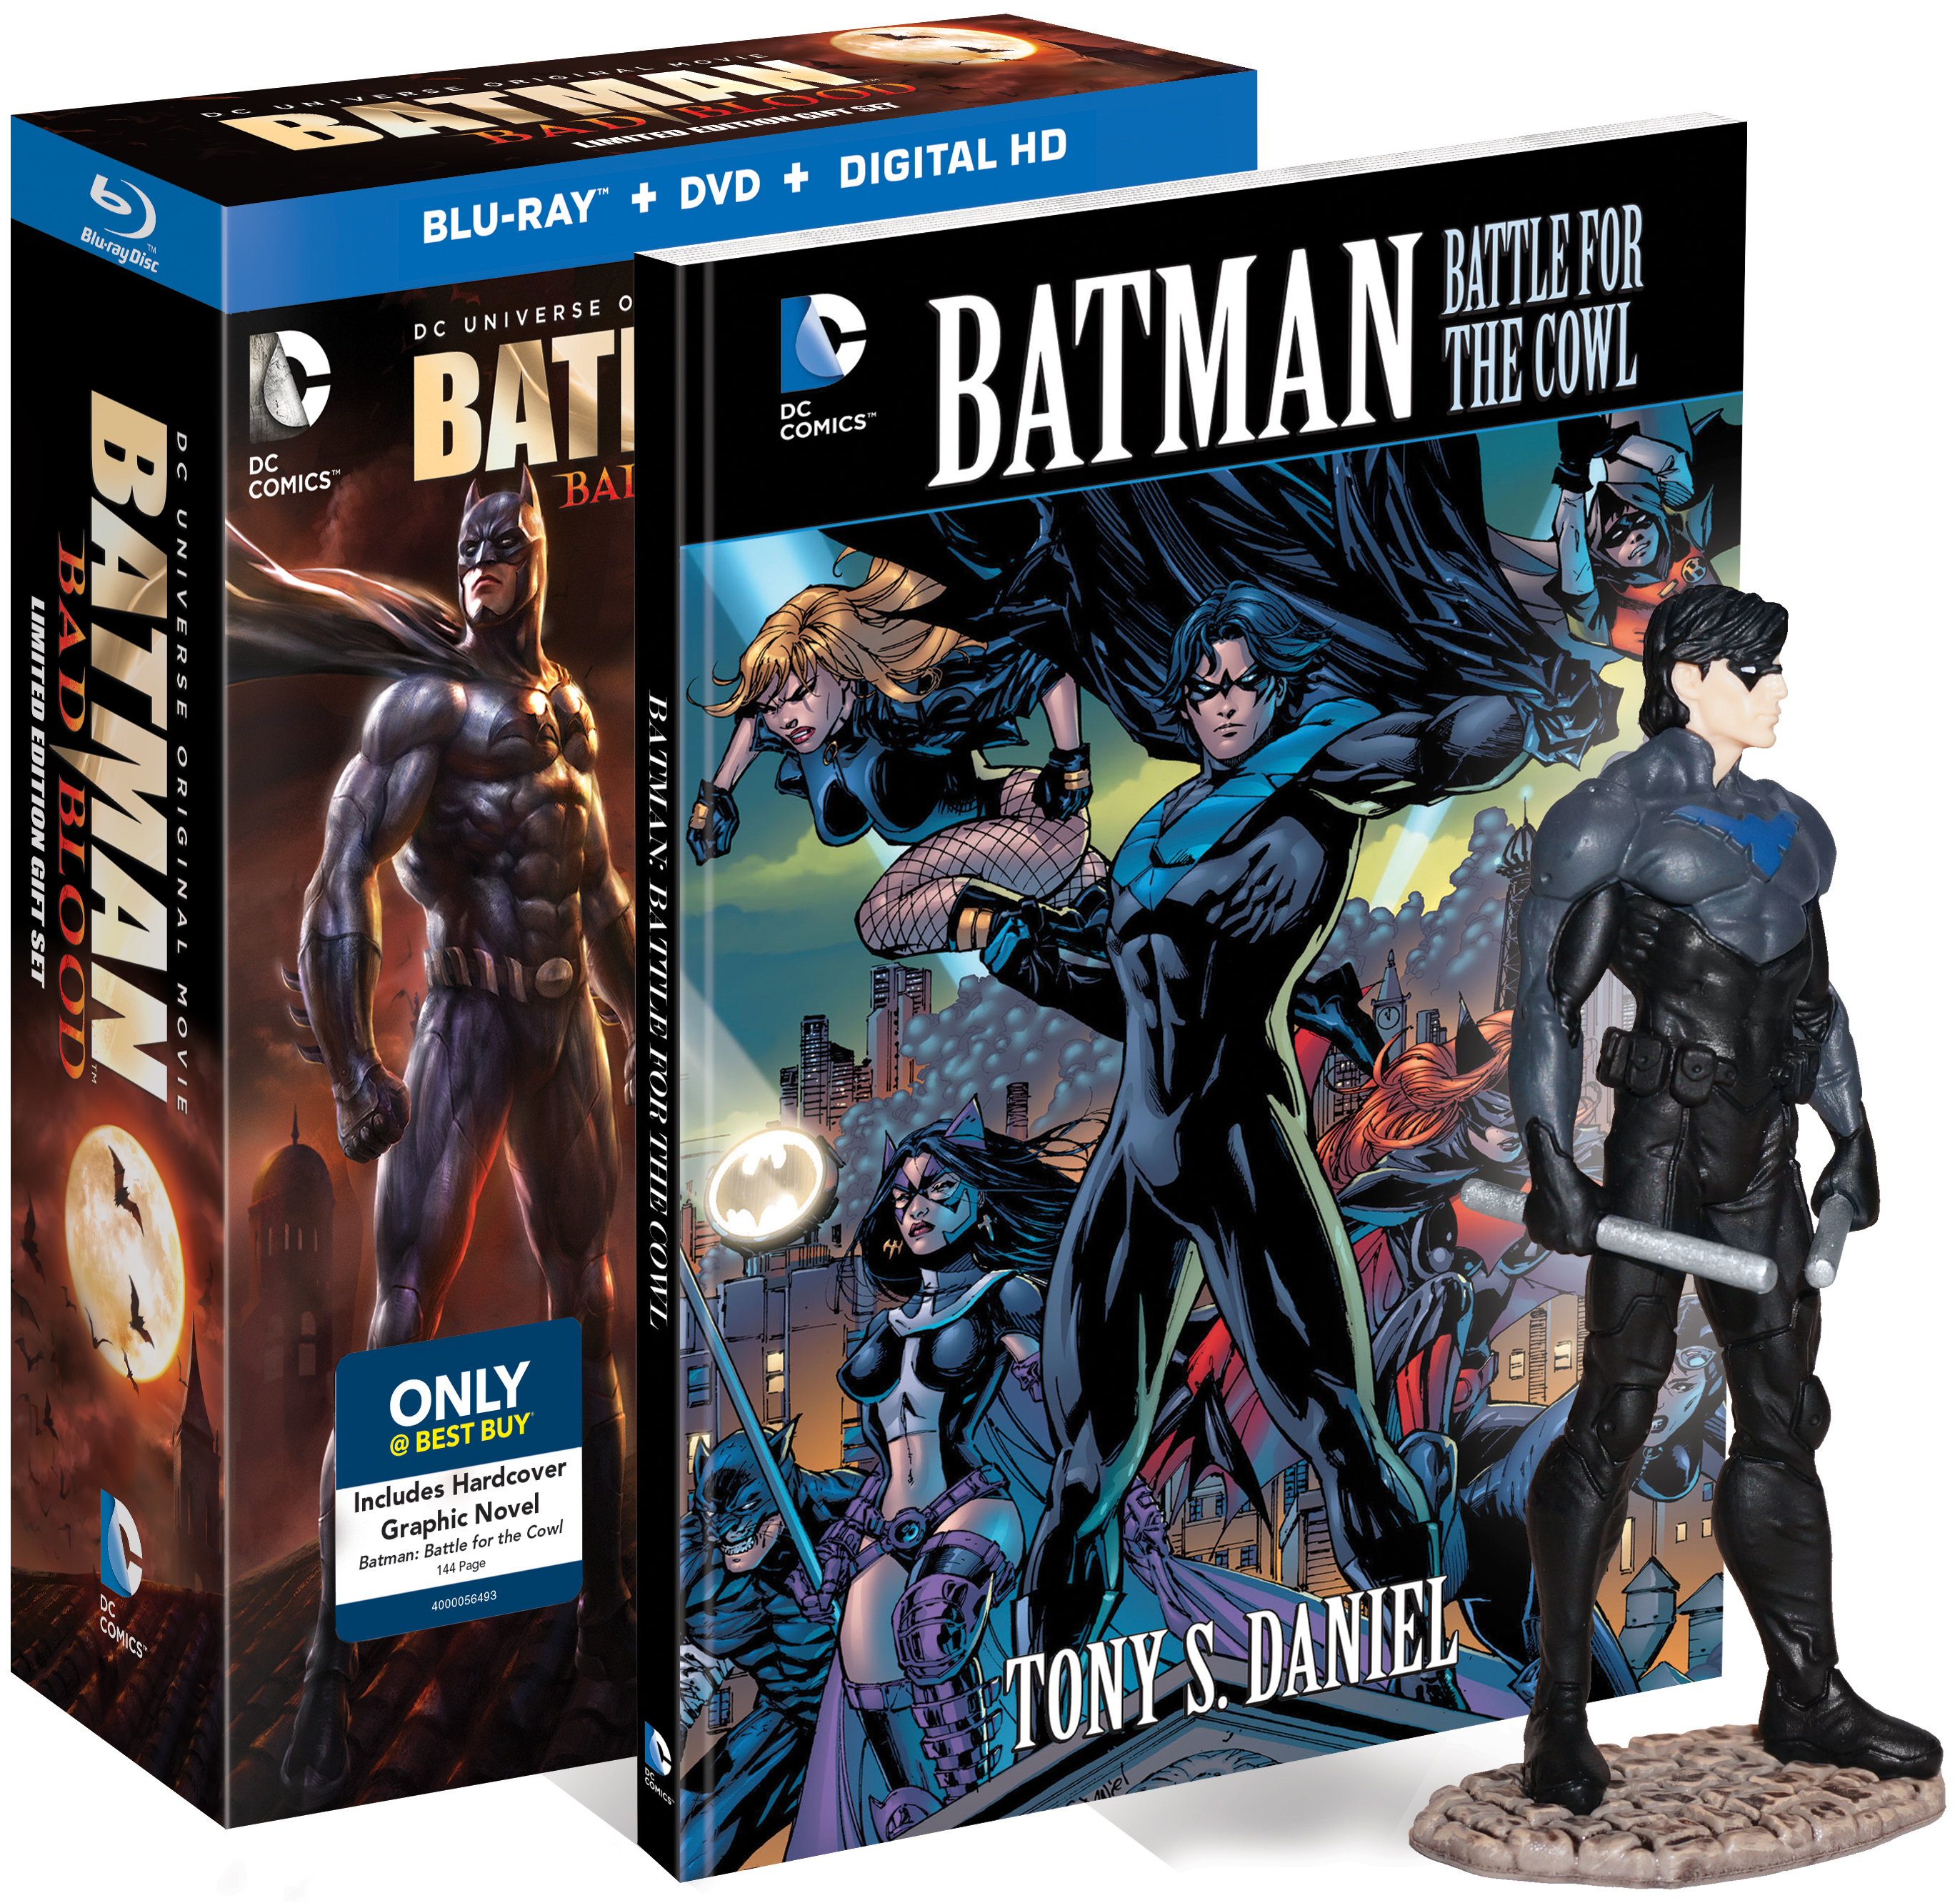 Batman: Bad Blood [Includes Digital Copy] [Blu-ray/DVD] [Only @ Best Buy]  [2016] - Best Buy